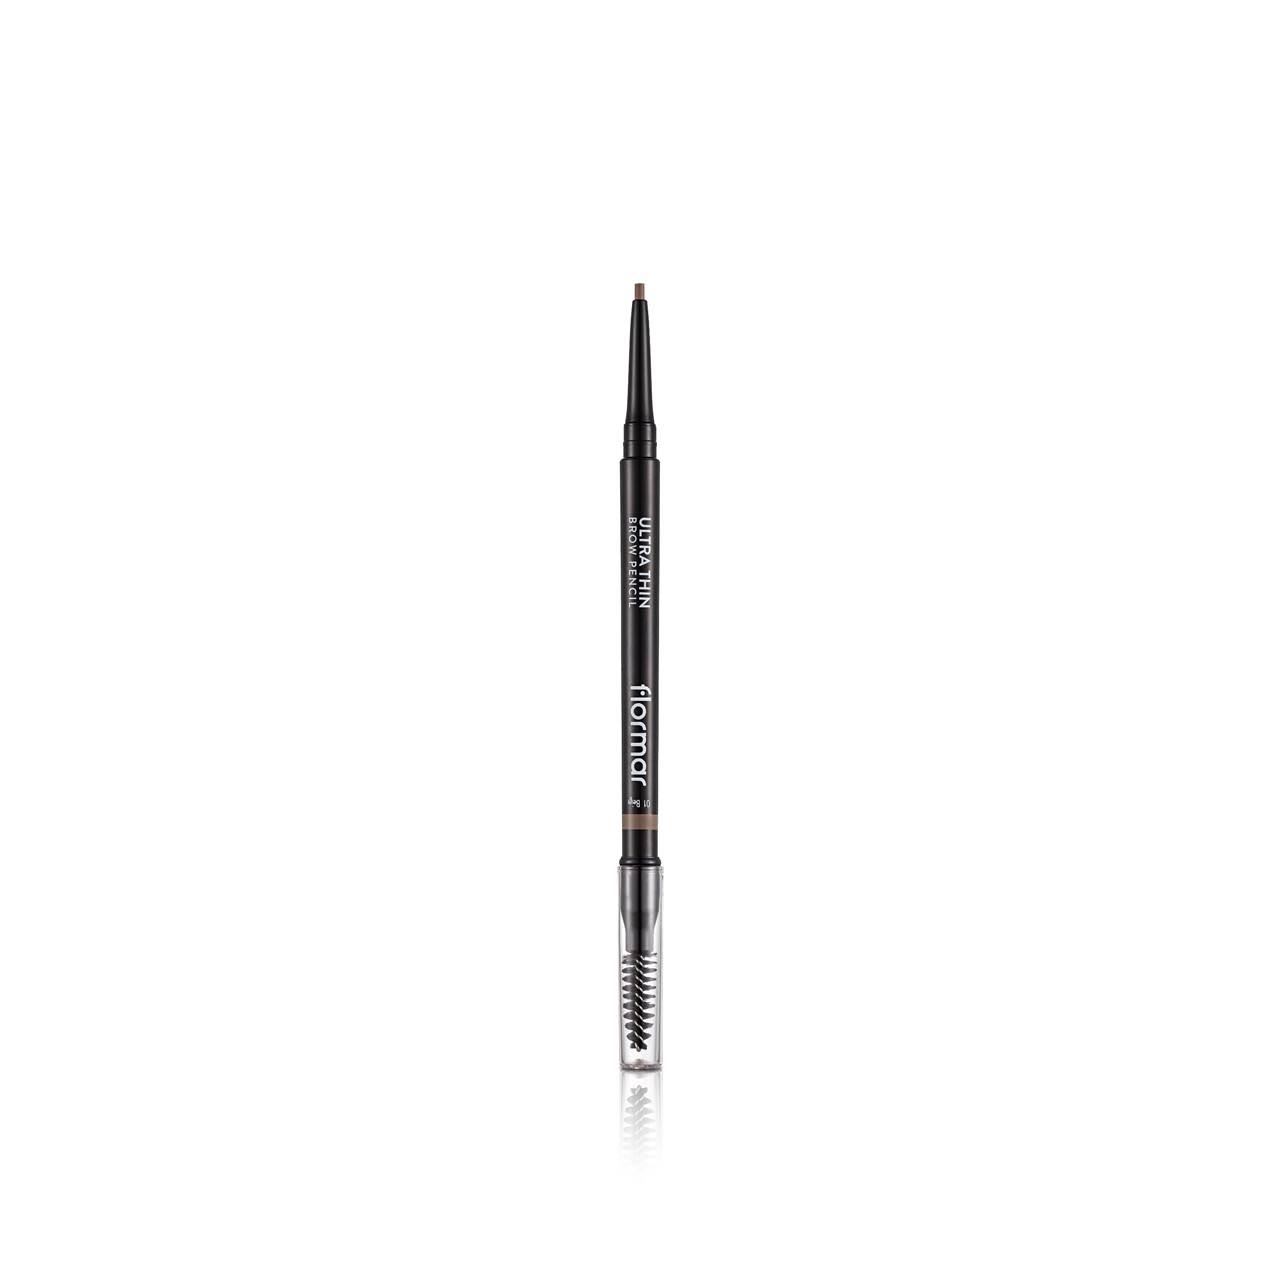 Flormar Ultra Thin Brow Pencil 01 Beige 0.14g